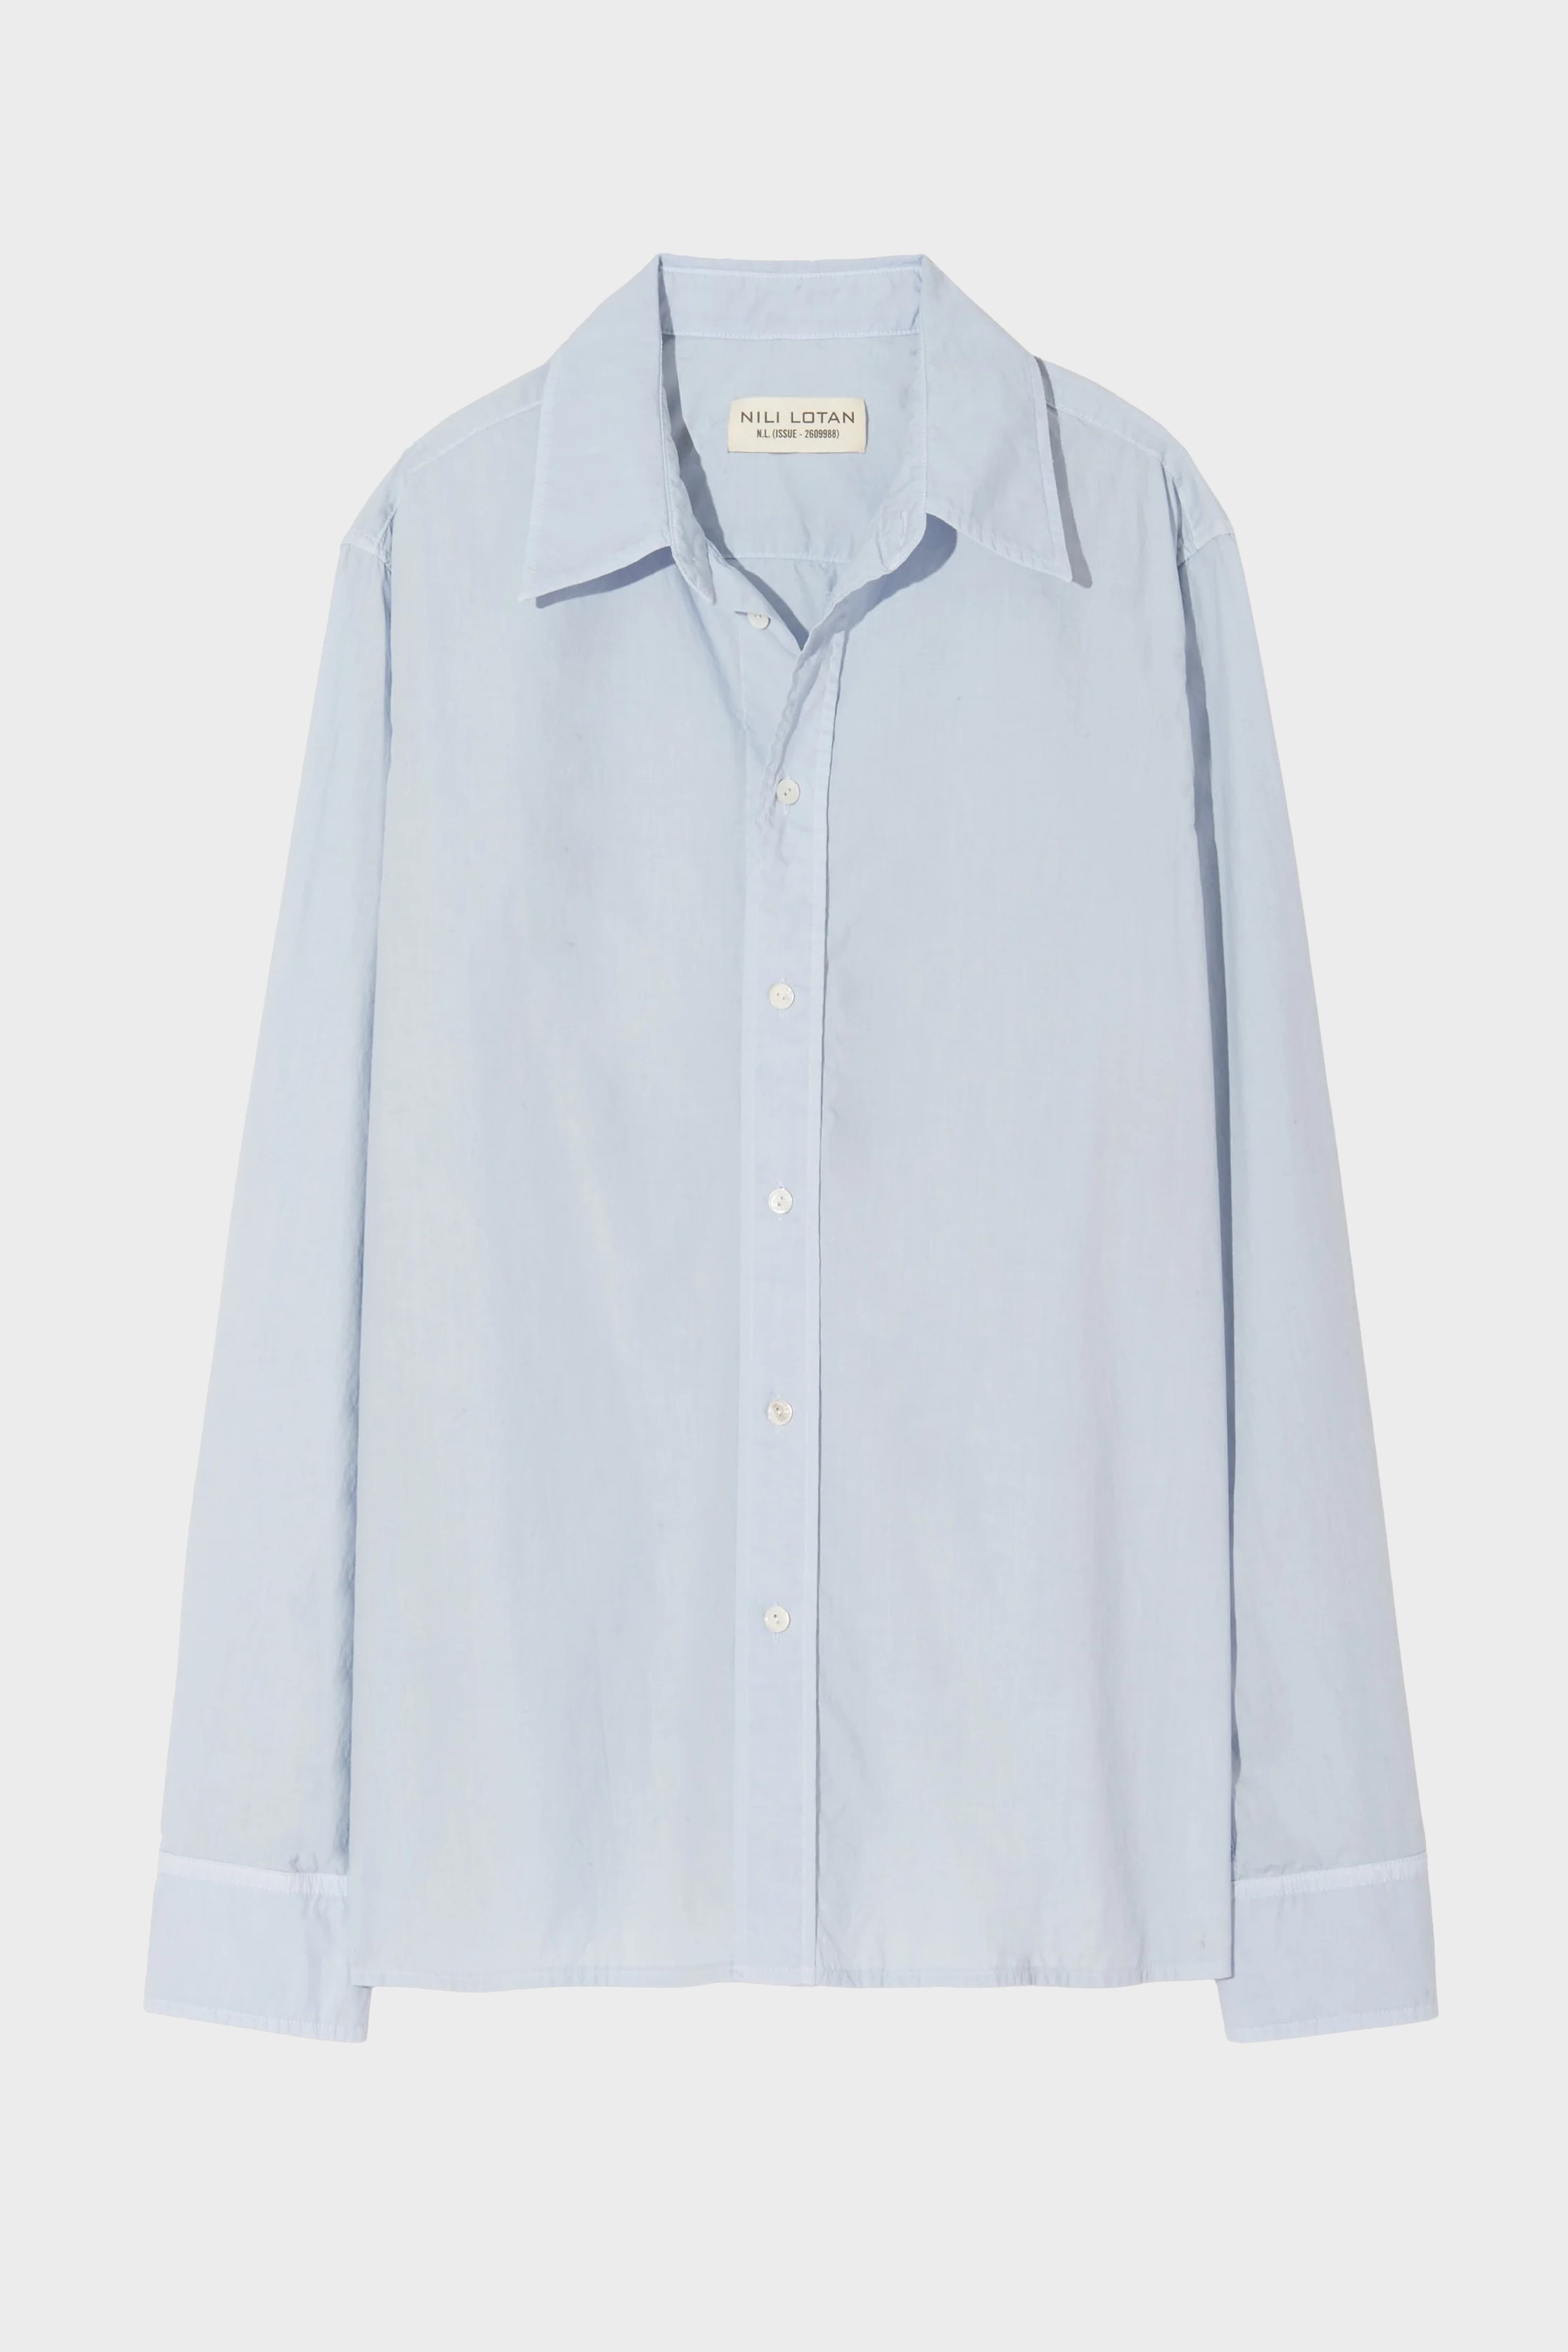 NILI LOTAN Raphael Classic Shirt in Light Blue XL